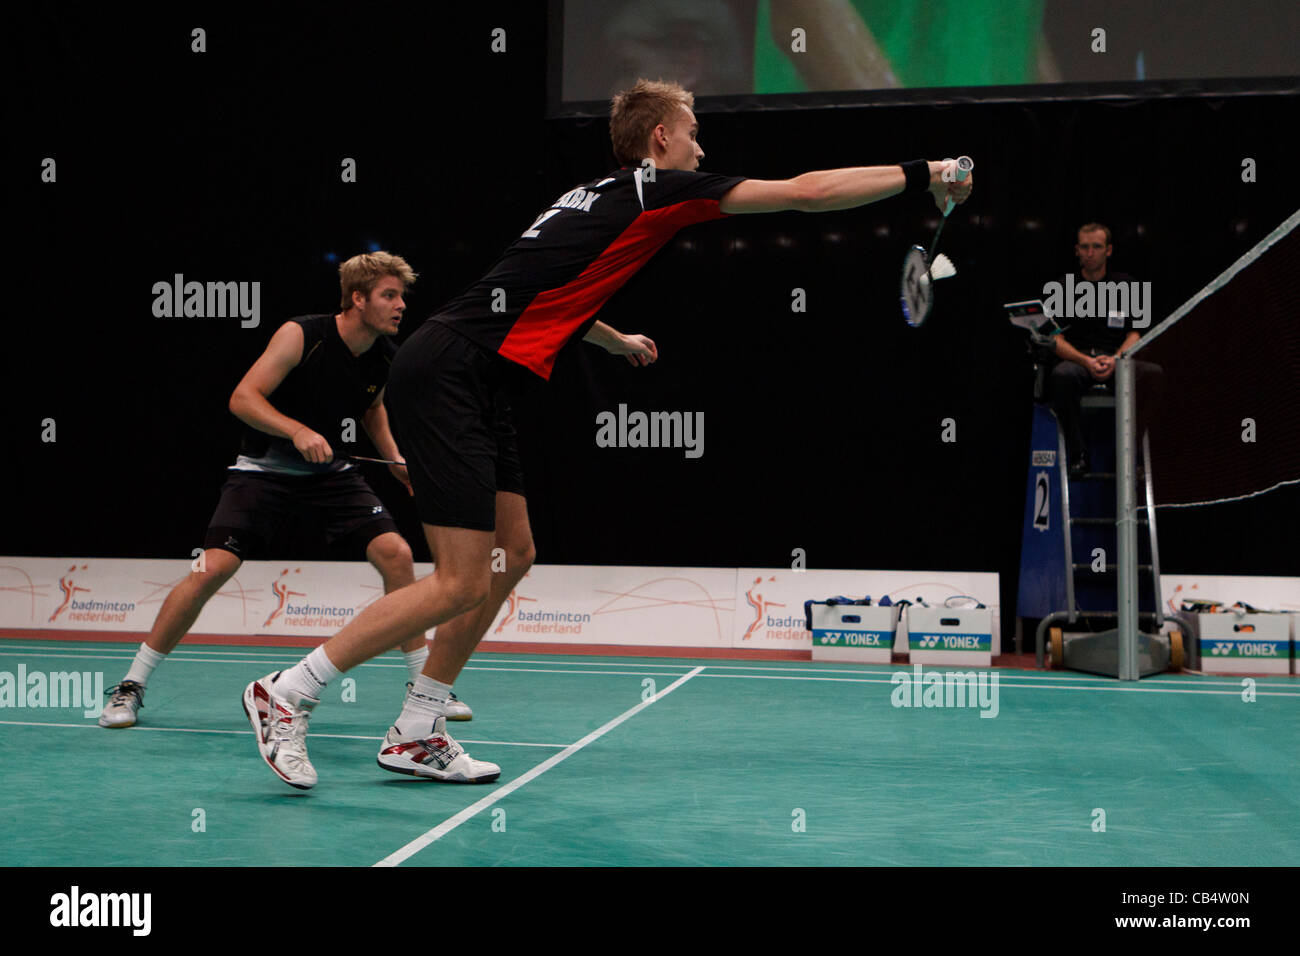 Badminton players Mads Pieler Kolding (left) and Christian John Skovgaard (right) from Denmark Stock Photo